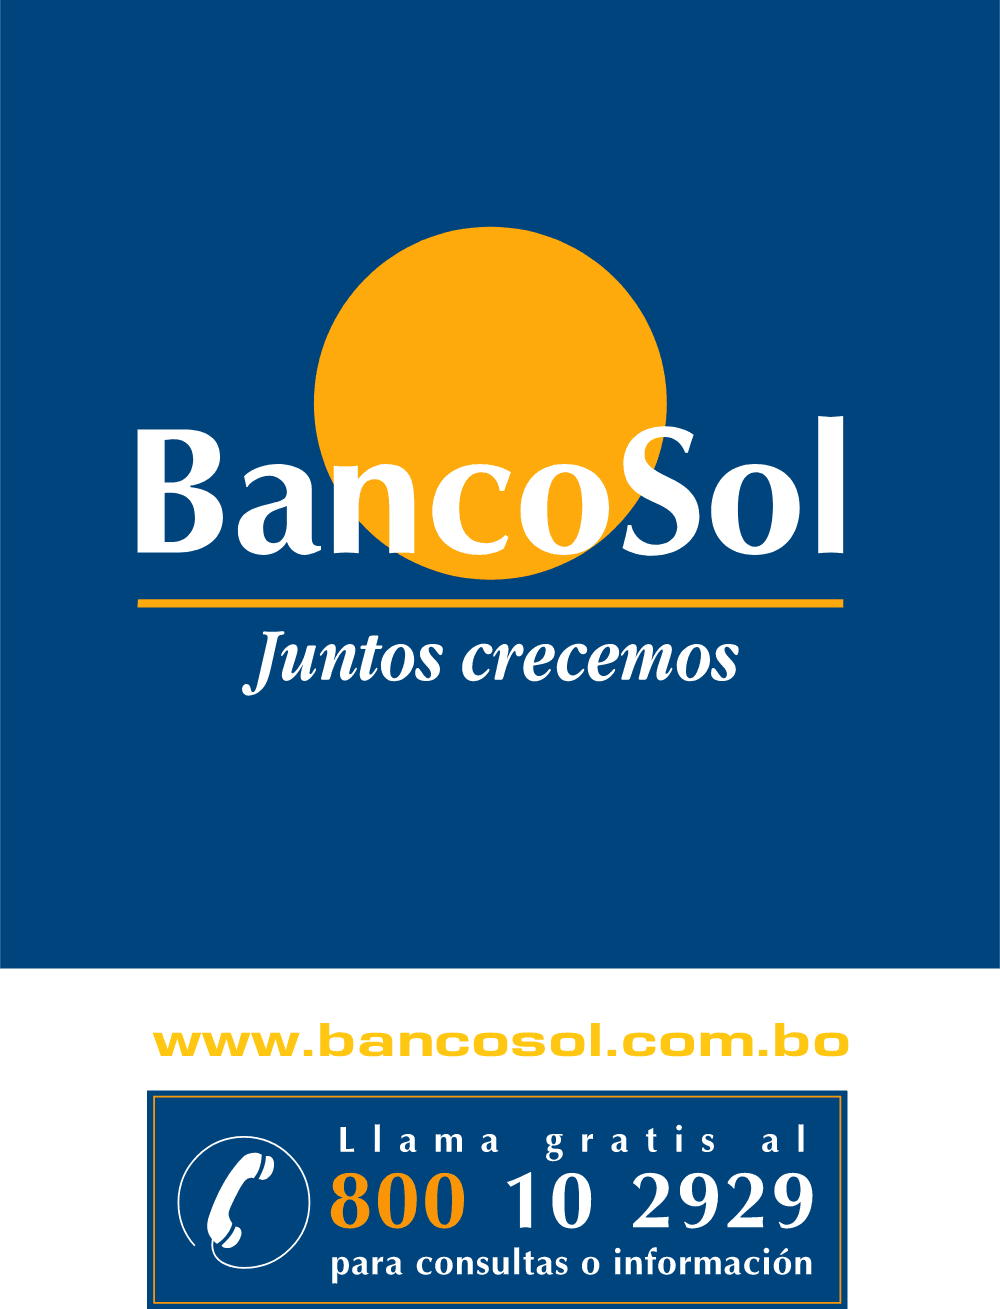 Banco Sol Logo download